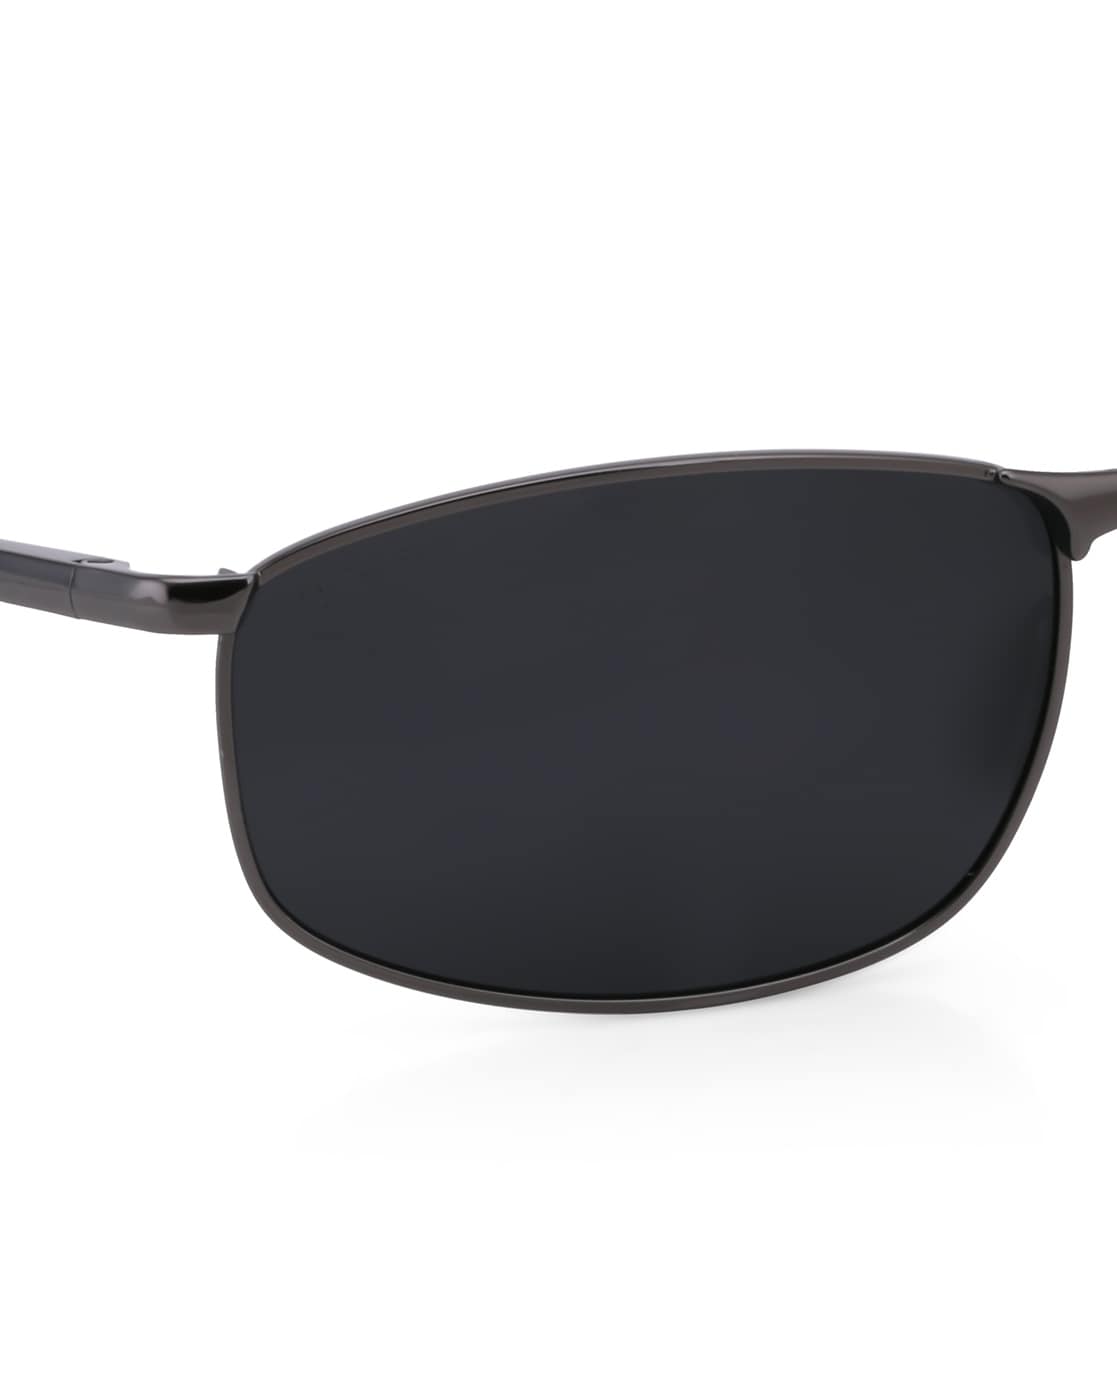 Black Retro Square Sunglasses For Men And Women – OPTiMETiK